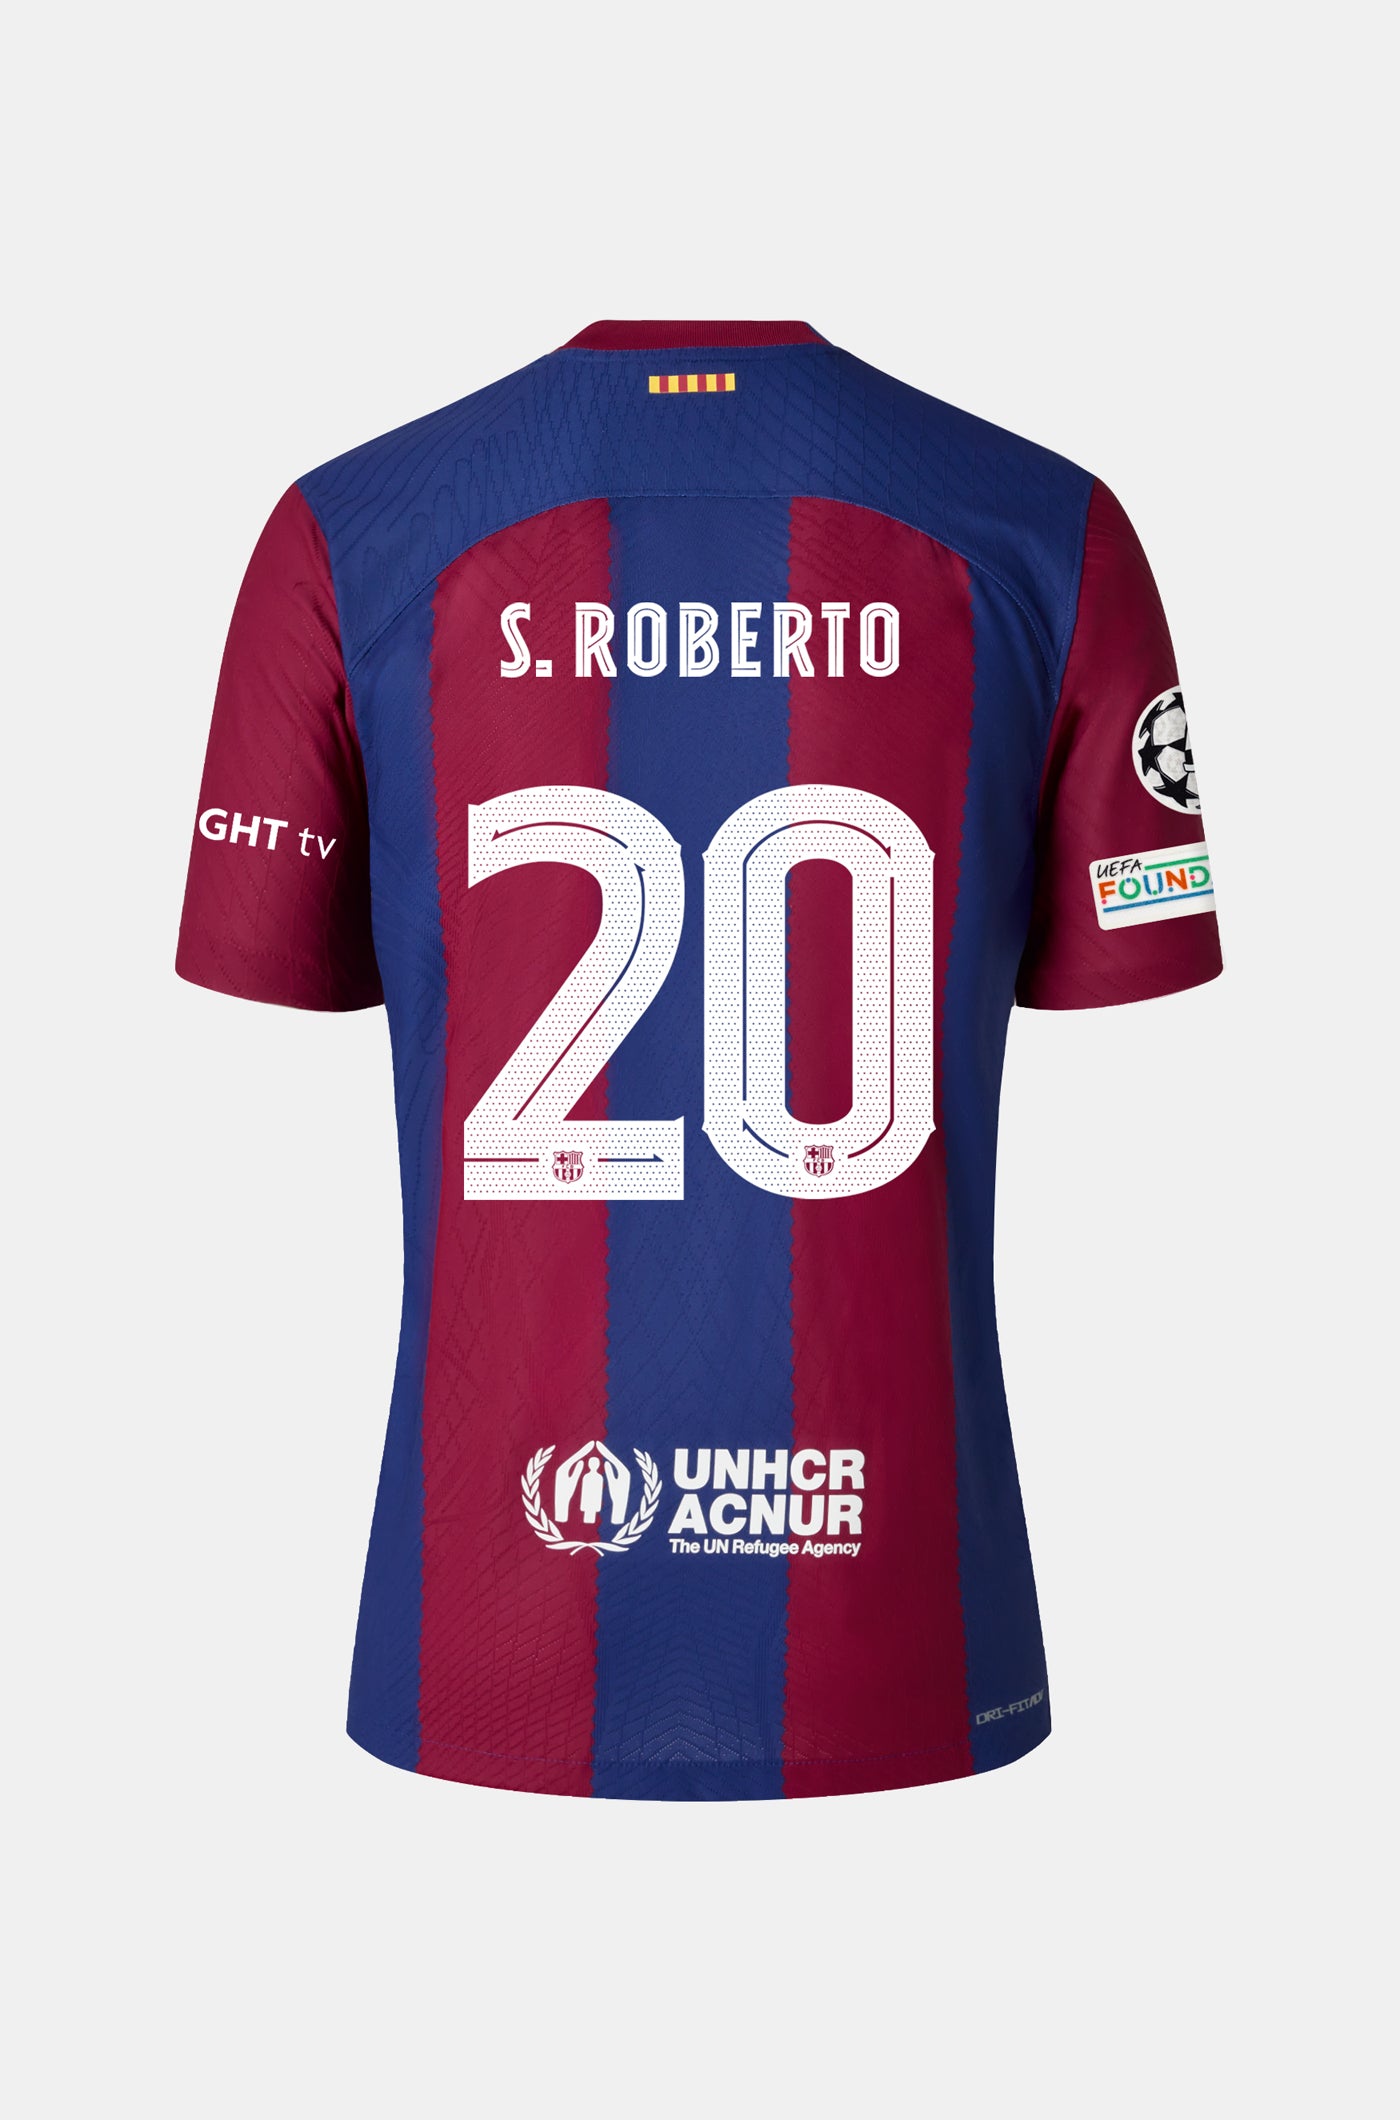 UCL FC Barcelona Home Shirt 23/24 Player's Edition - Women - S. ROBERTO